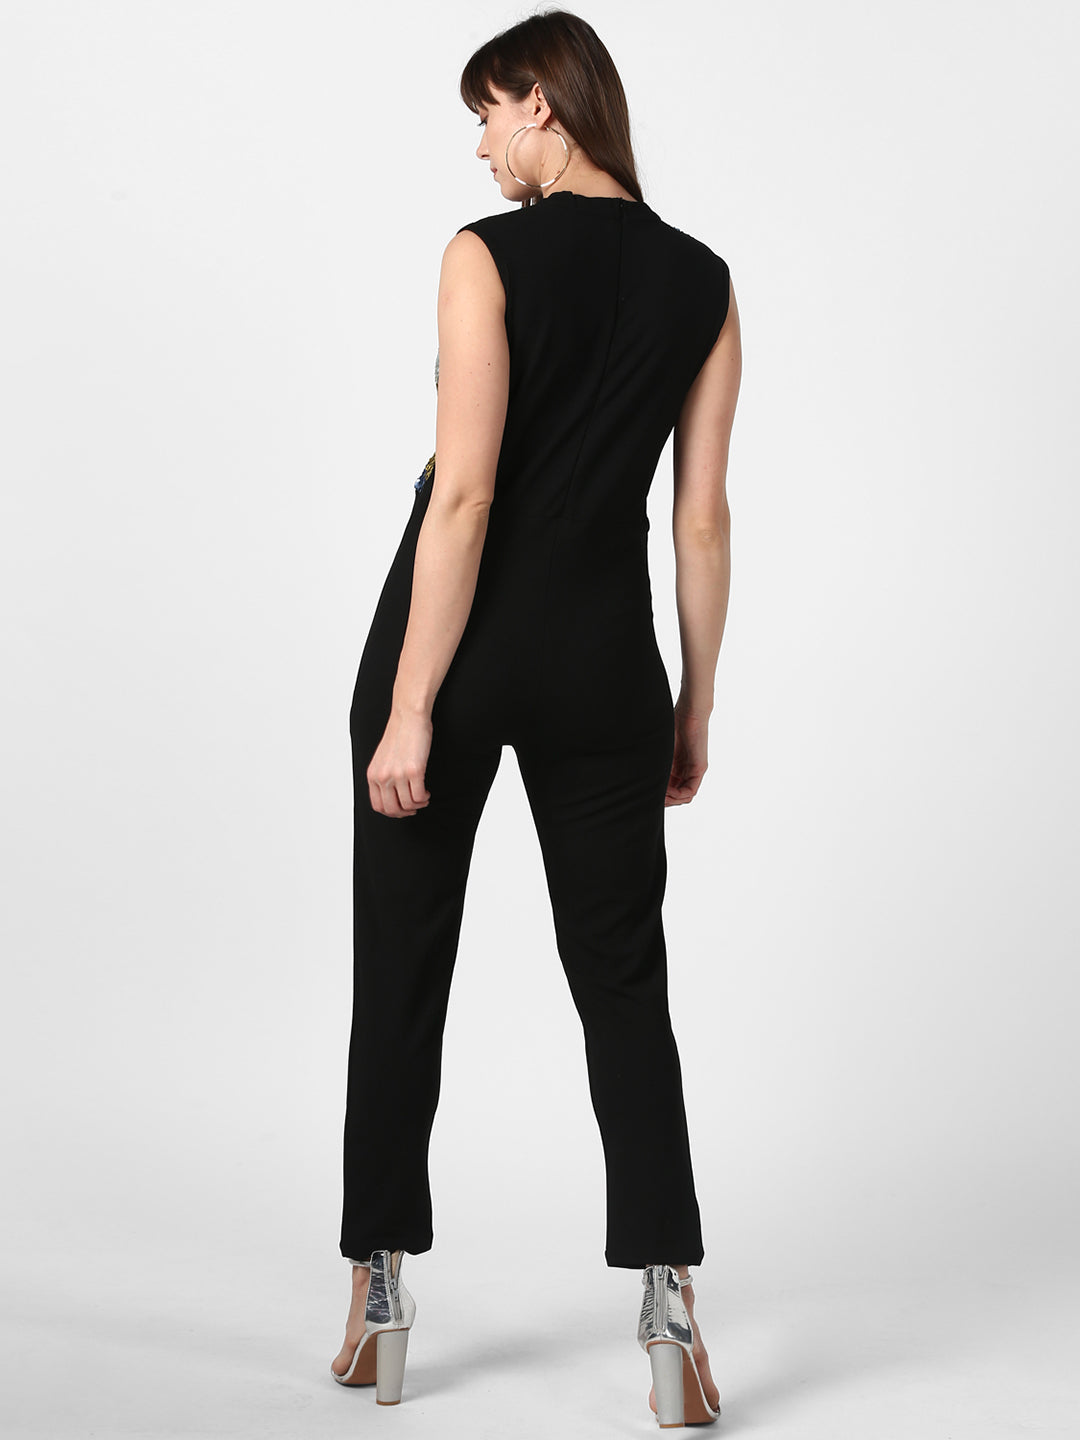 Women's Black and Multi-coloured Sequin Jumpsuit